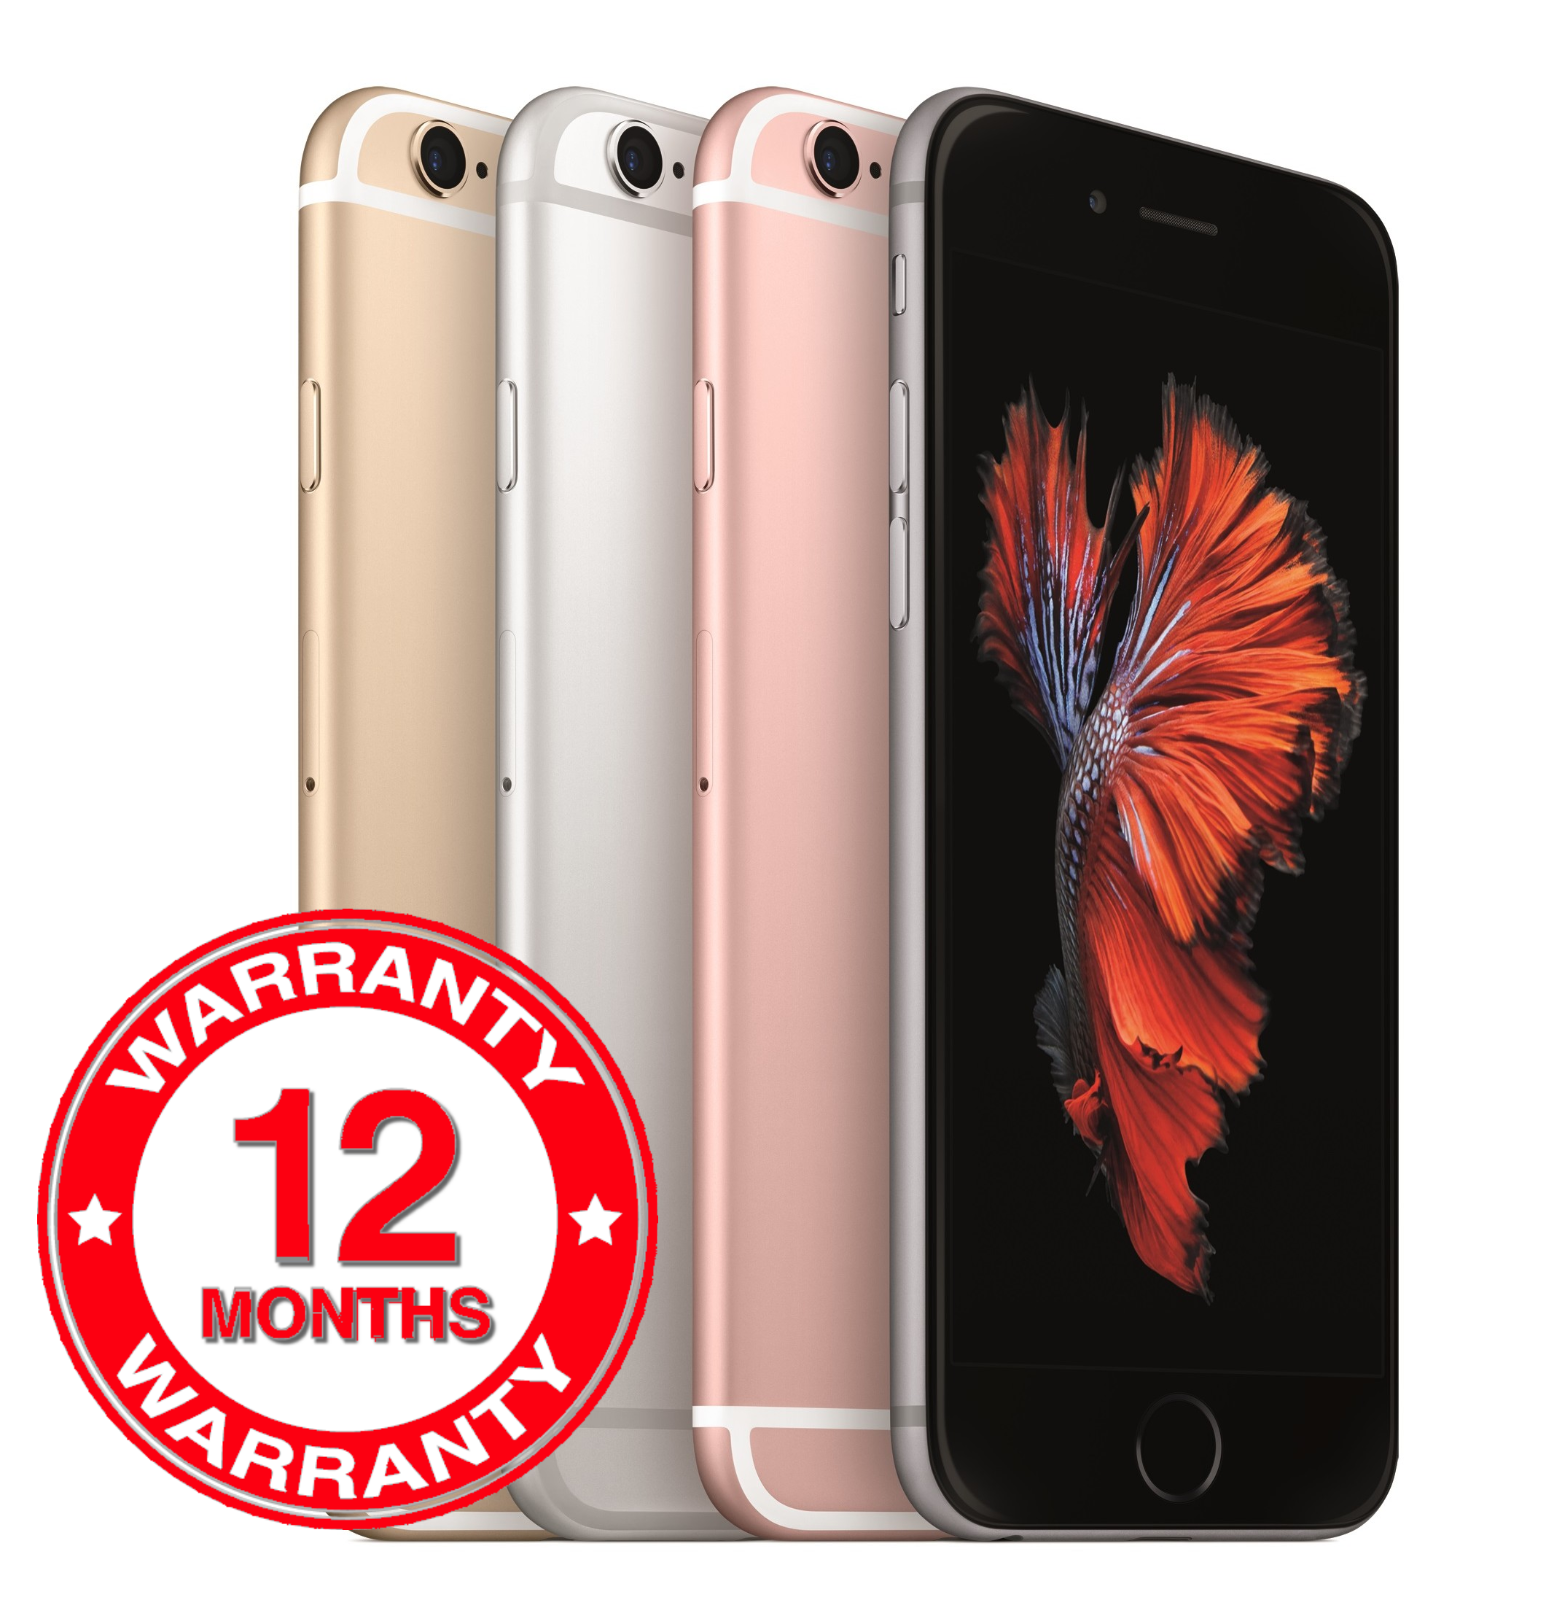 Apple iPhone 6s 16GB 32GB 64GB 128GB Unlocked SIM Free Smartphone Various Grades